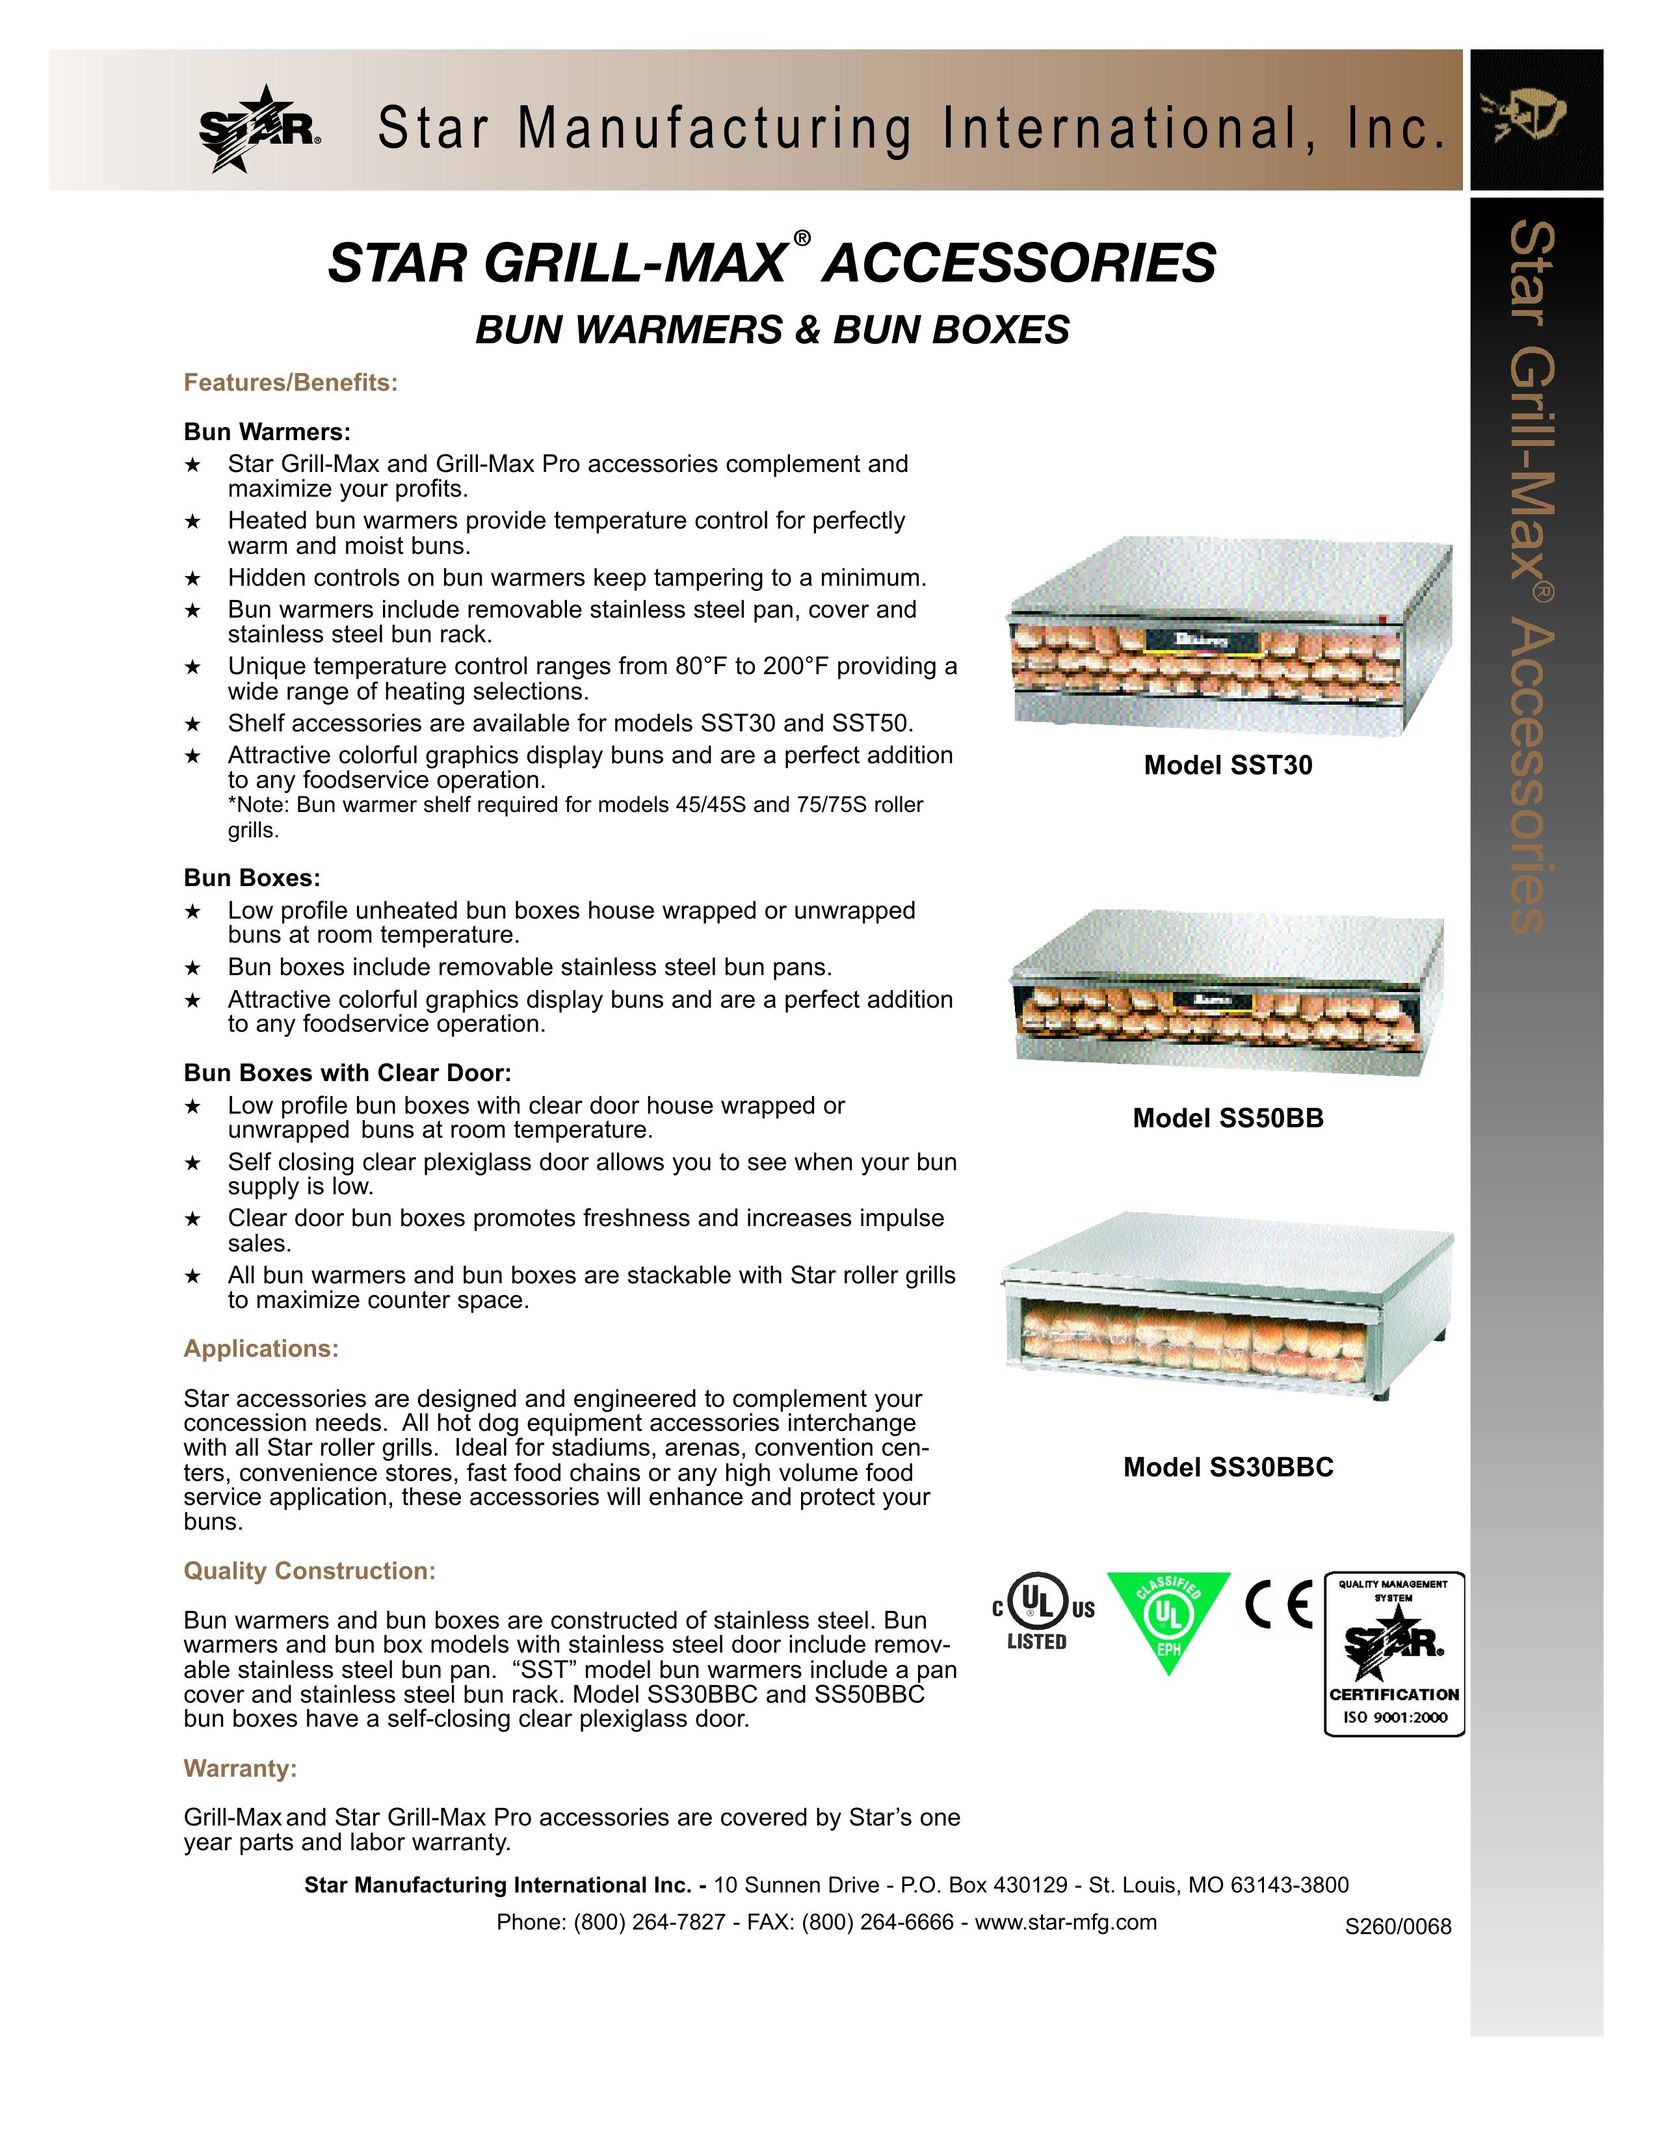 Star Manufacturing SST-30 Food Warmer User Manual